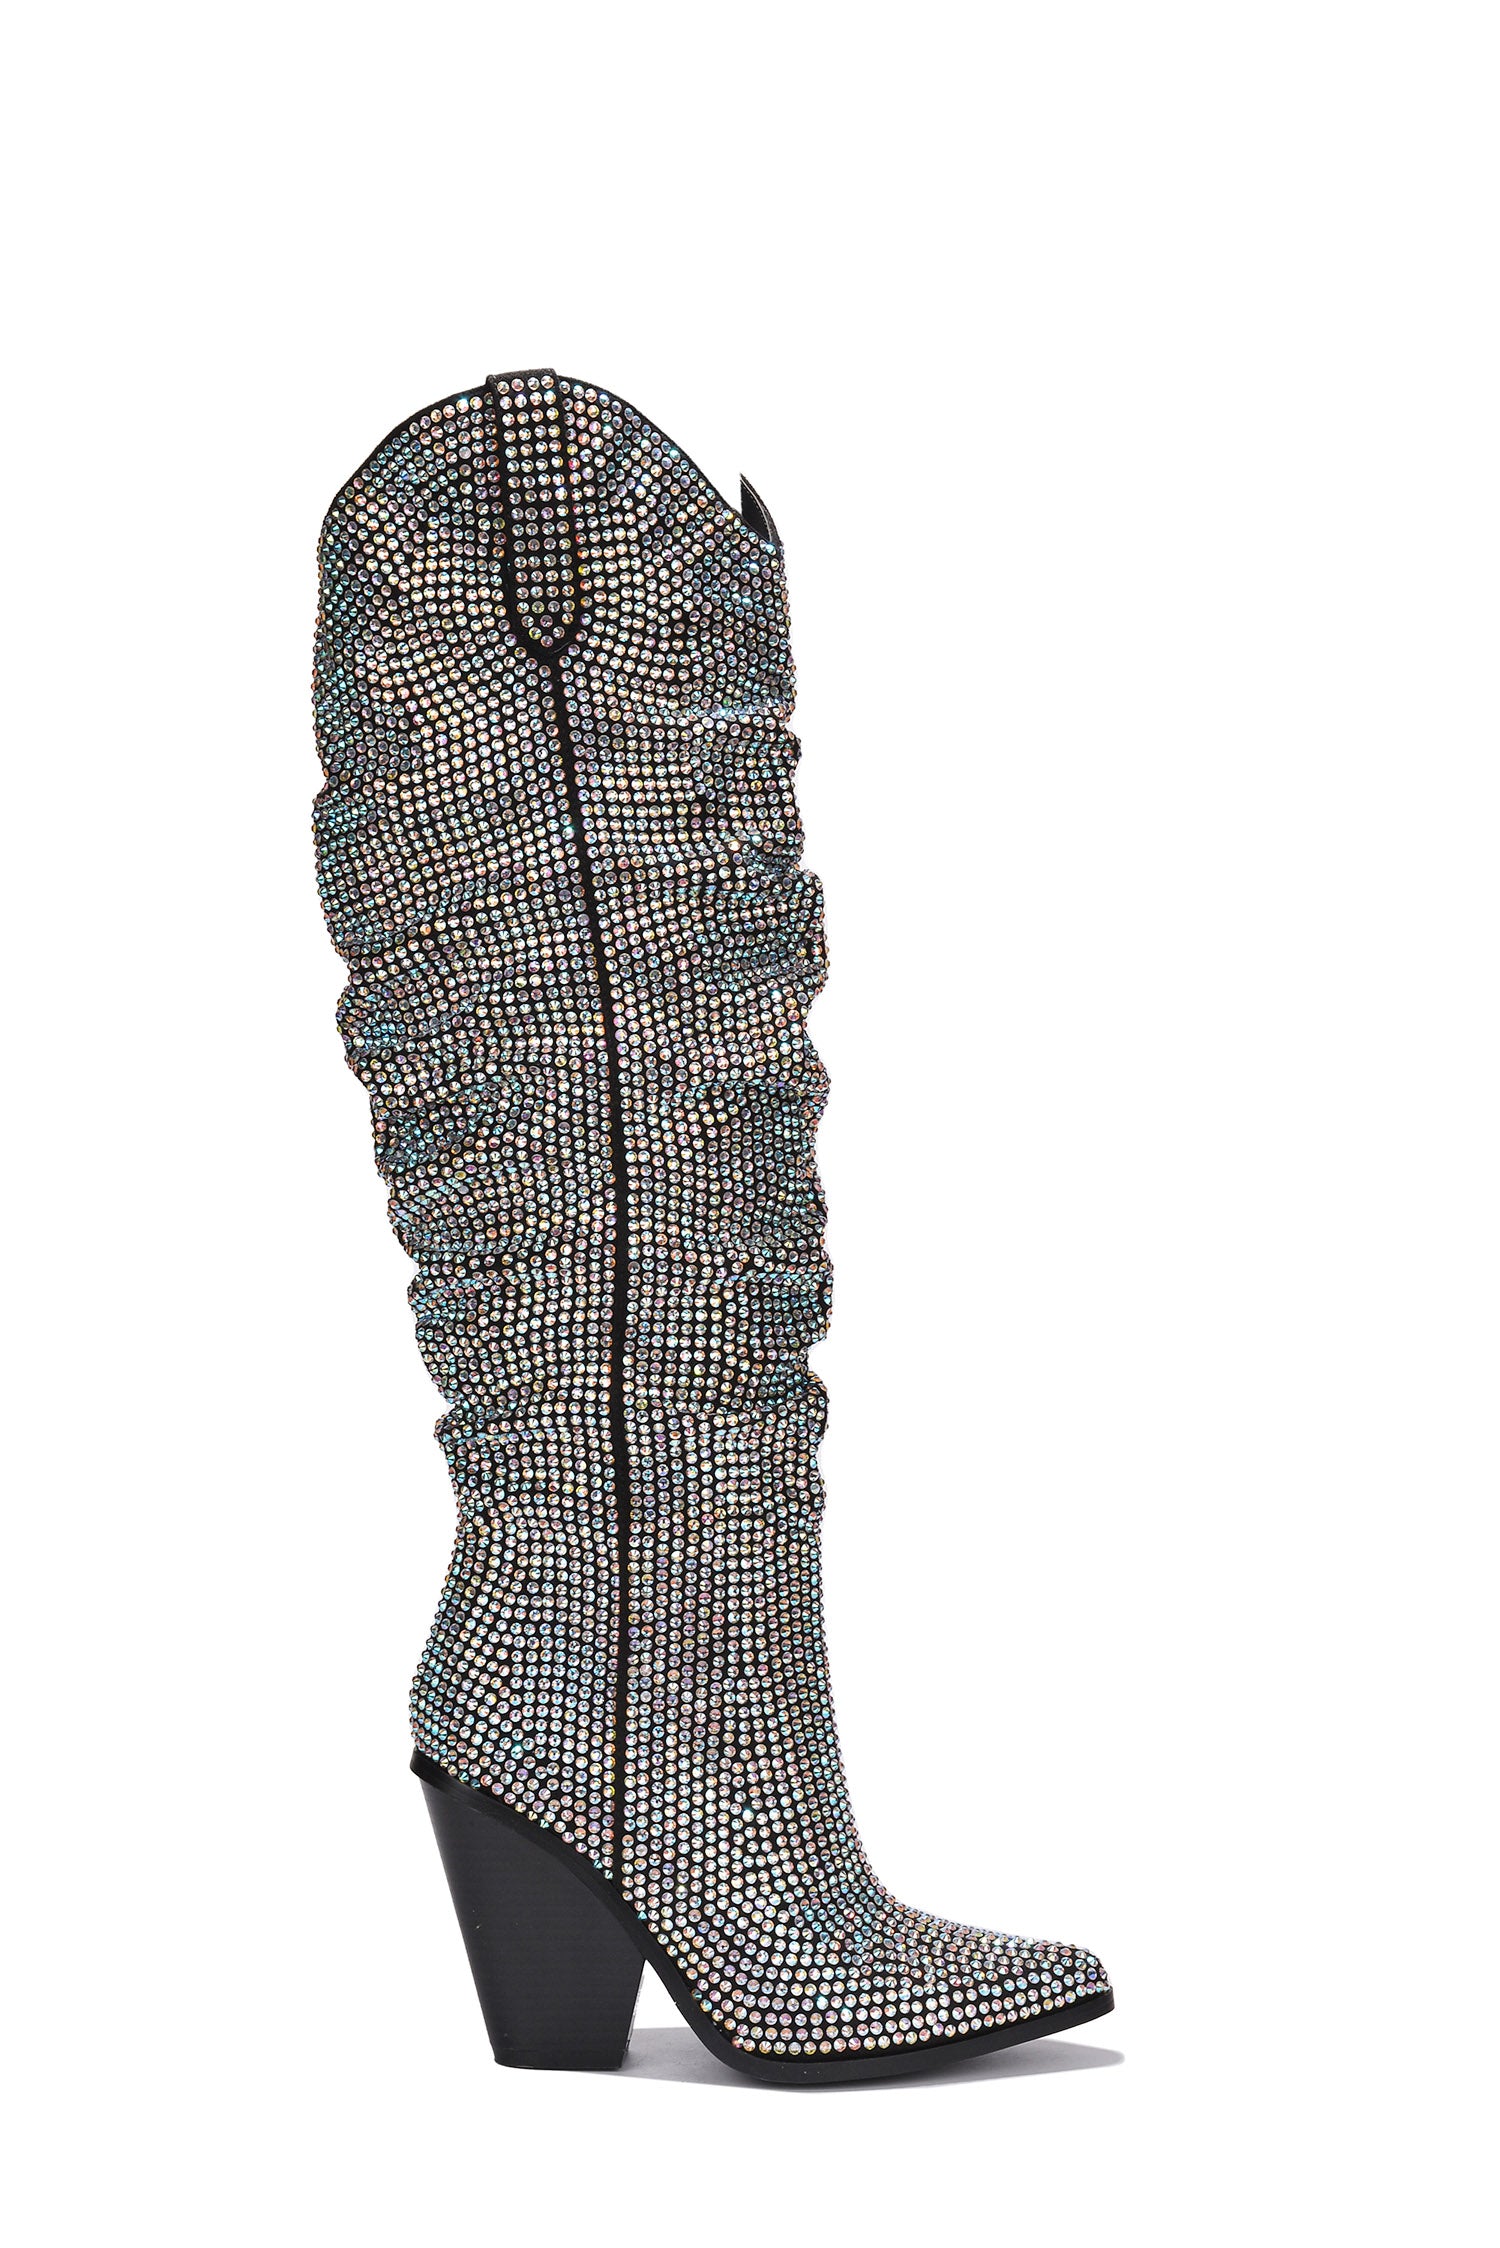 UrbanOG - Diamante Pointed Toe Black Rhinestone Boots - BOOTS